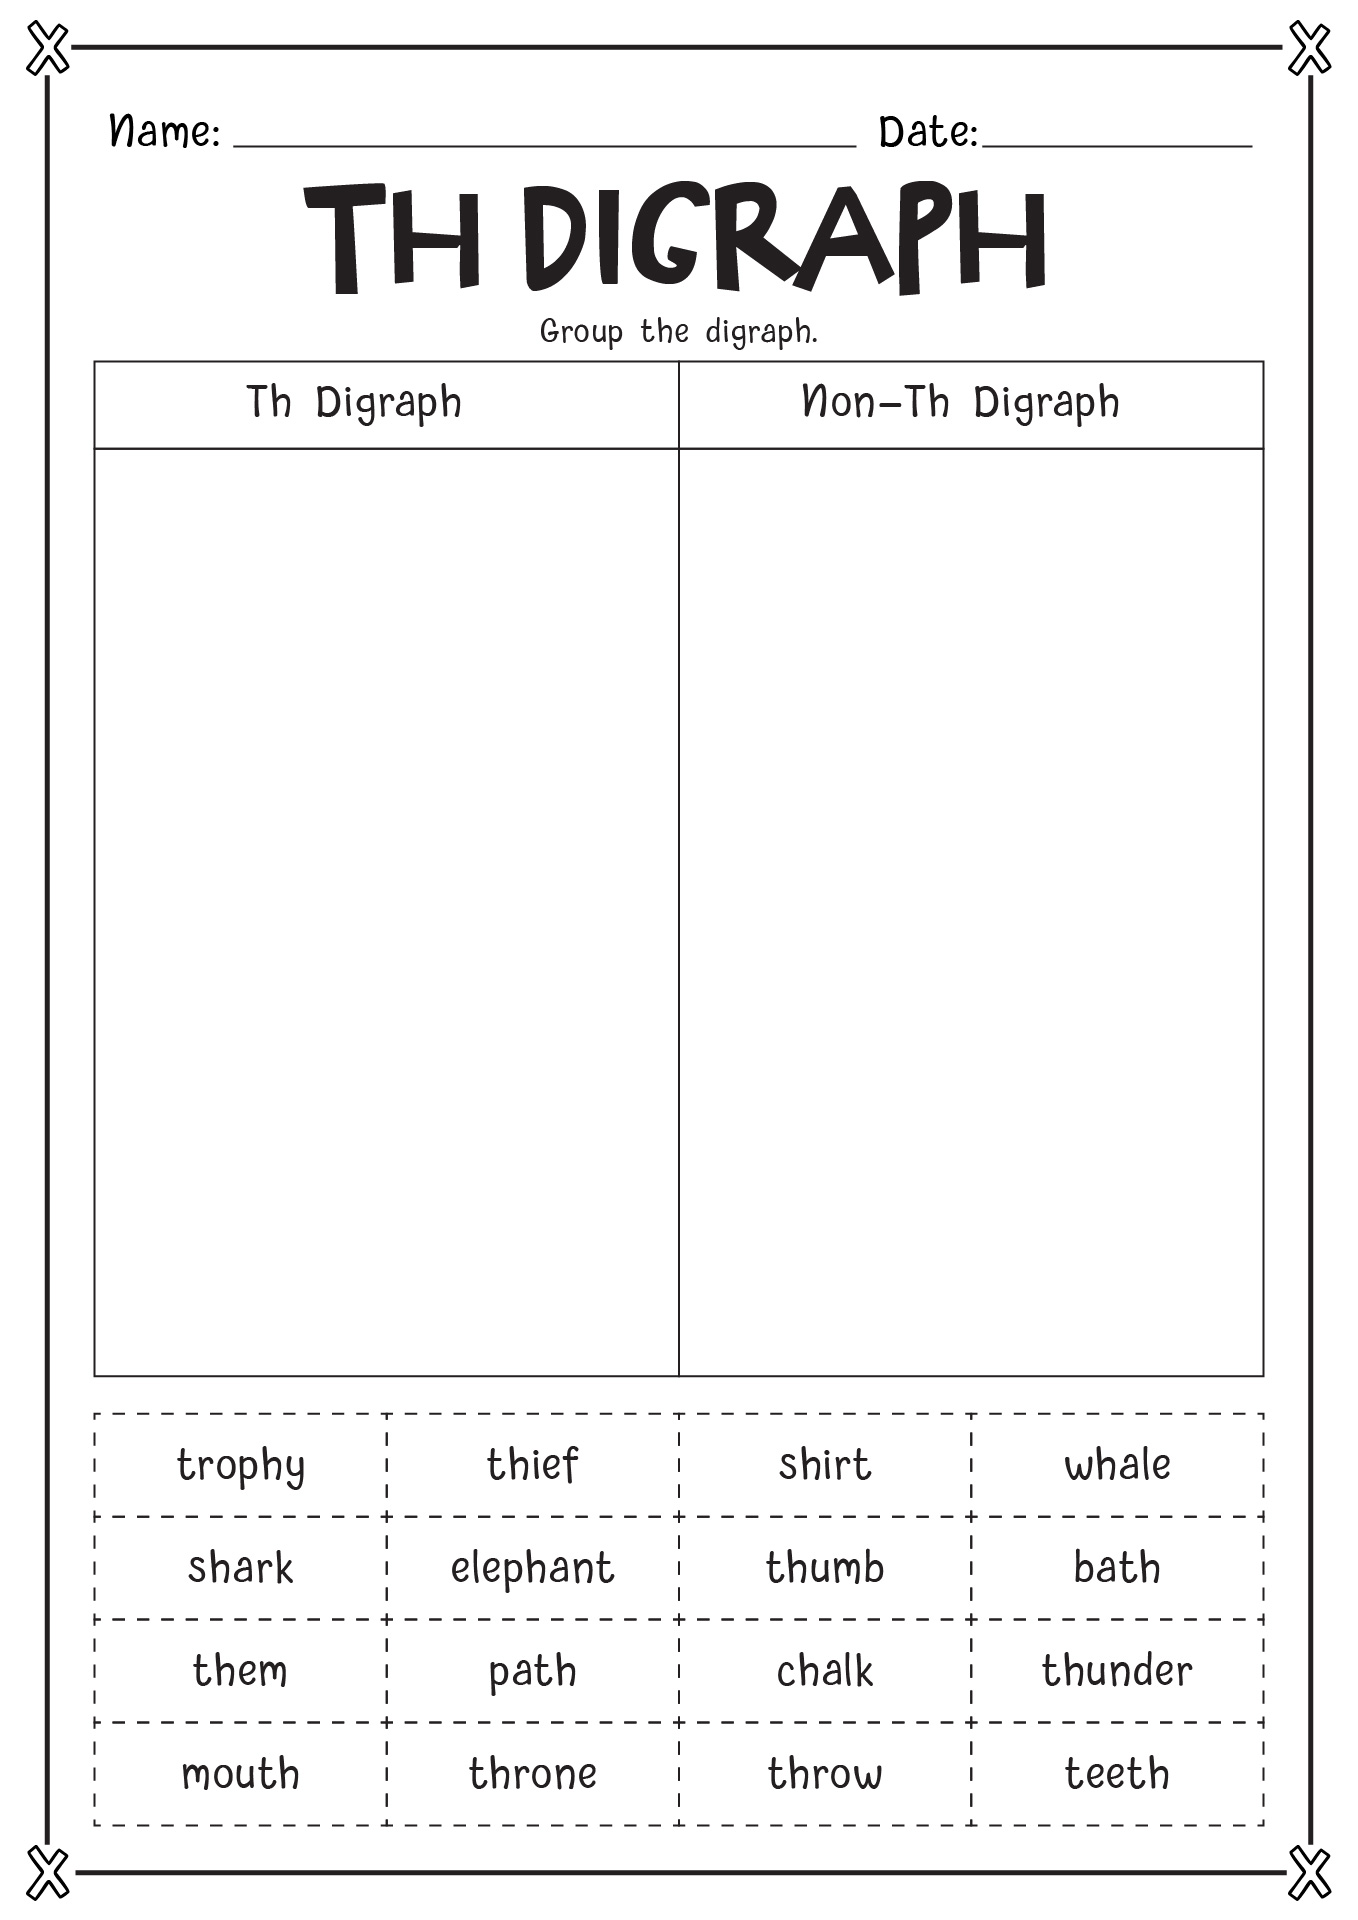 Th Digraph Worksheets Image